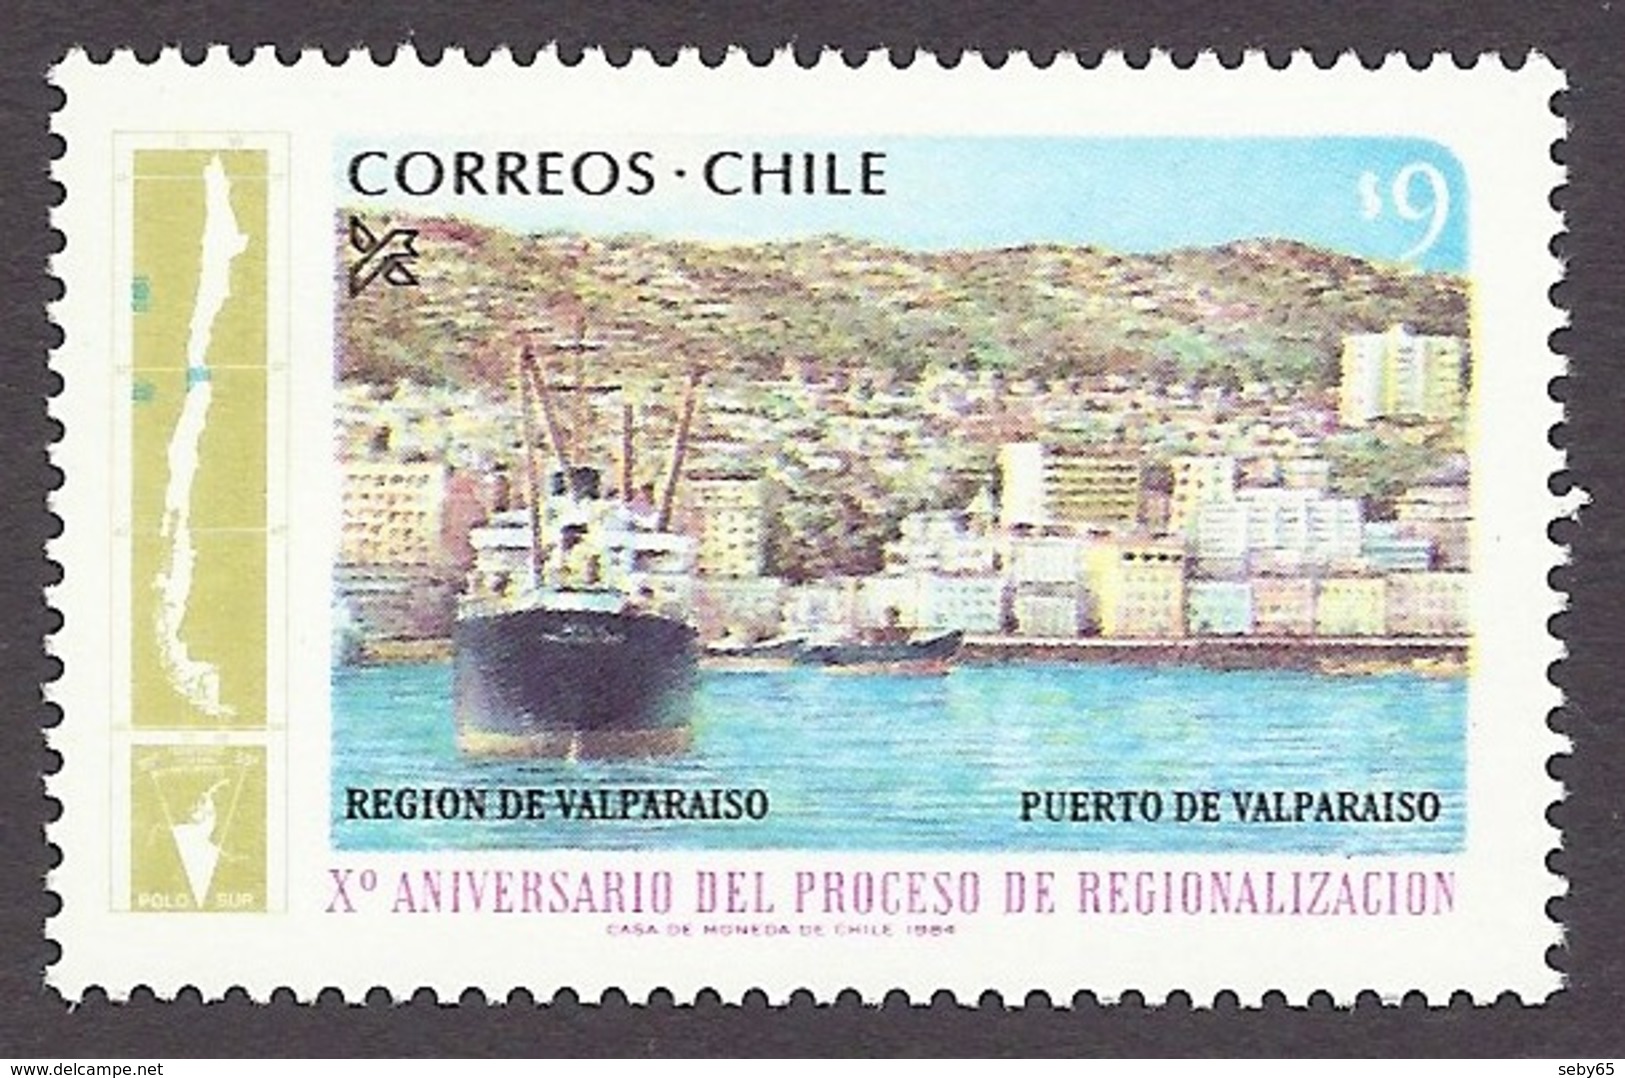 Chile / Chili 1984 Regions - Region De Valparaiso, Puerto, Port, Harbour, View Of The Town MNH - Chile